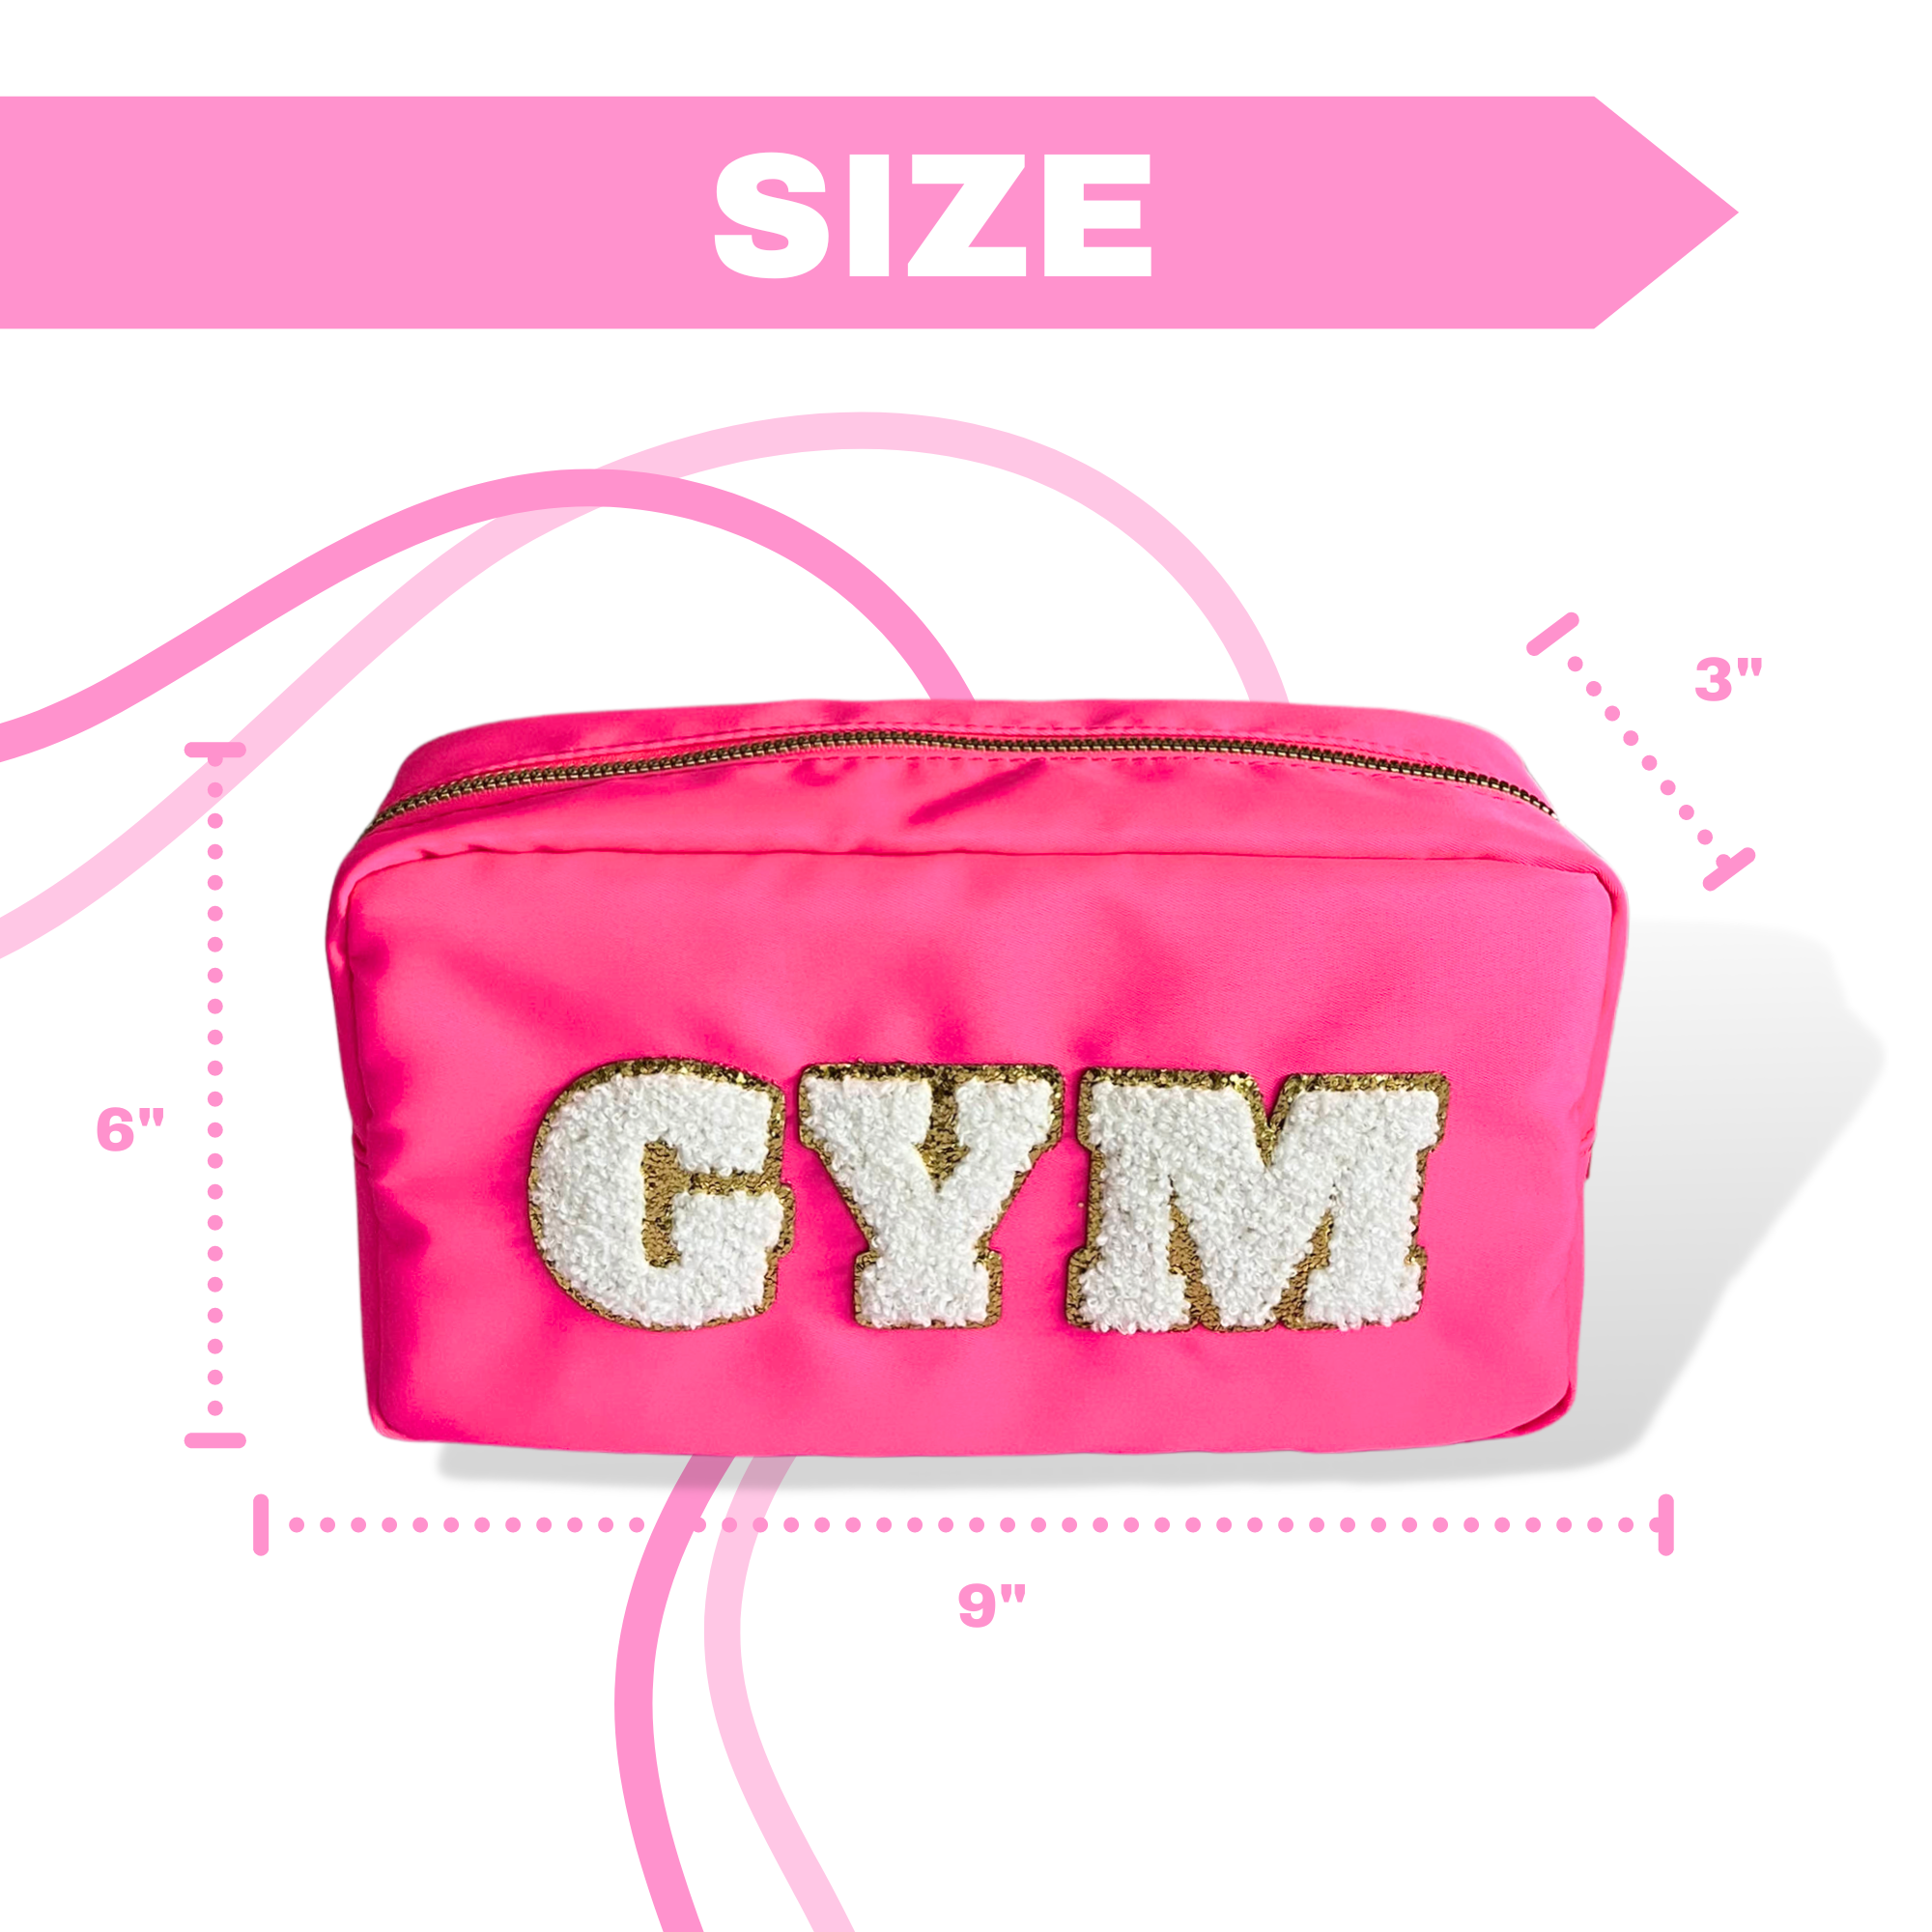 GYM STUFF Gymnastics Makeup Bag